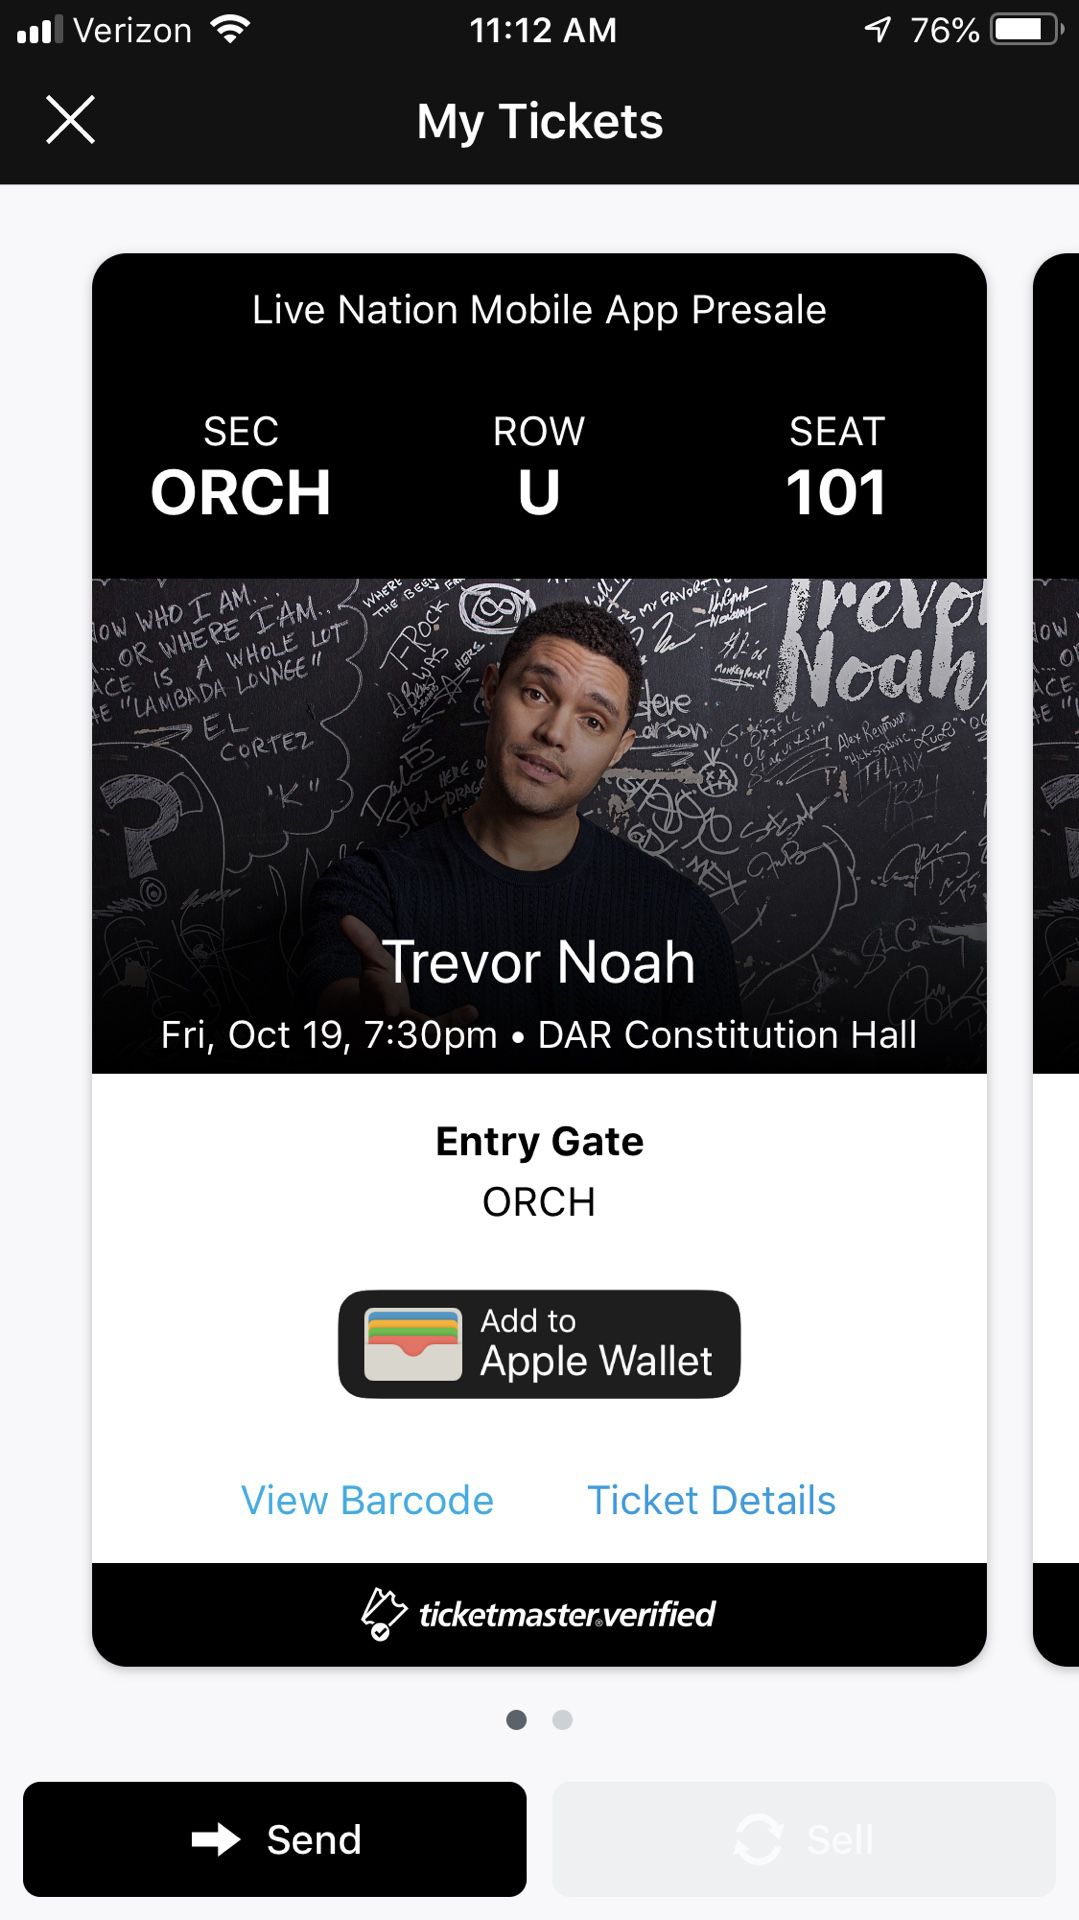 Trevor Noah Tickets (2), Fri, Oct 19th - $200 each